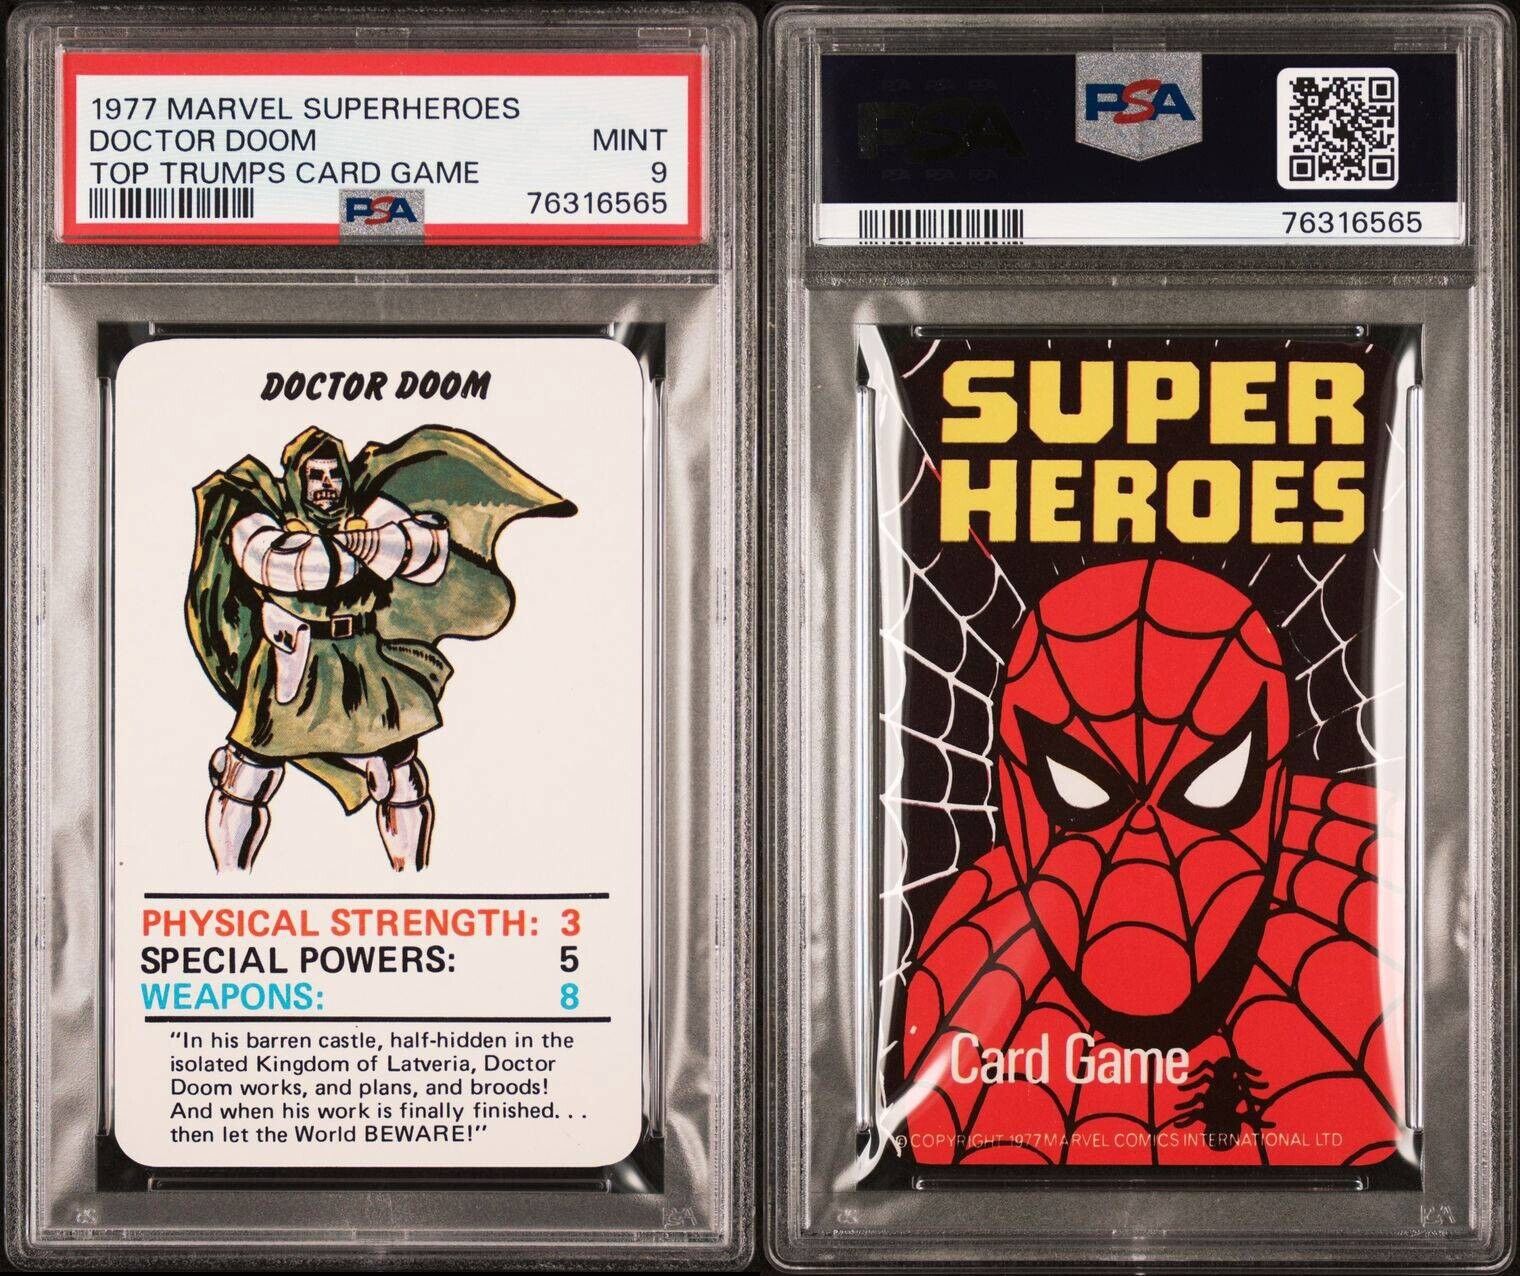 1977 MARVEL SUPERHEROES DOCTOR DOOM TOP TRUMPS CARD GAME PSA 9 MINT POP 2 RARE